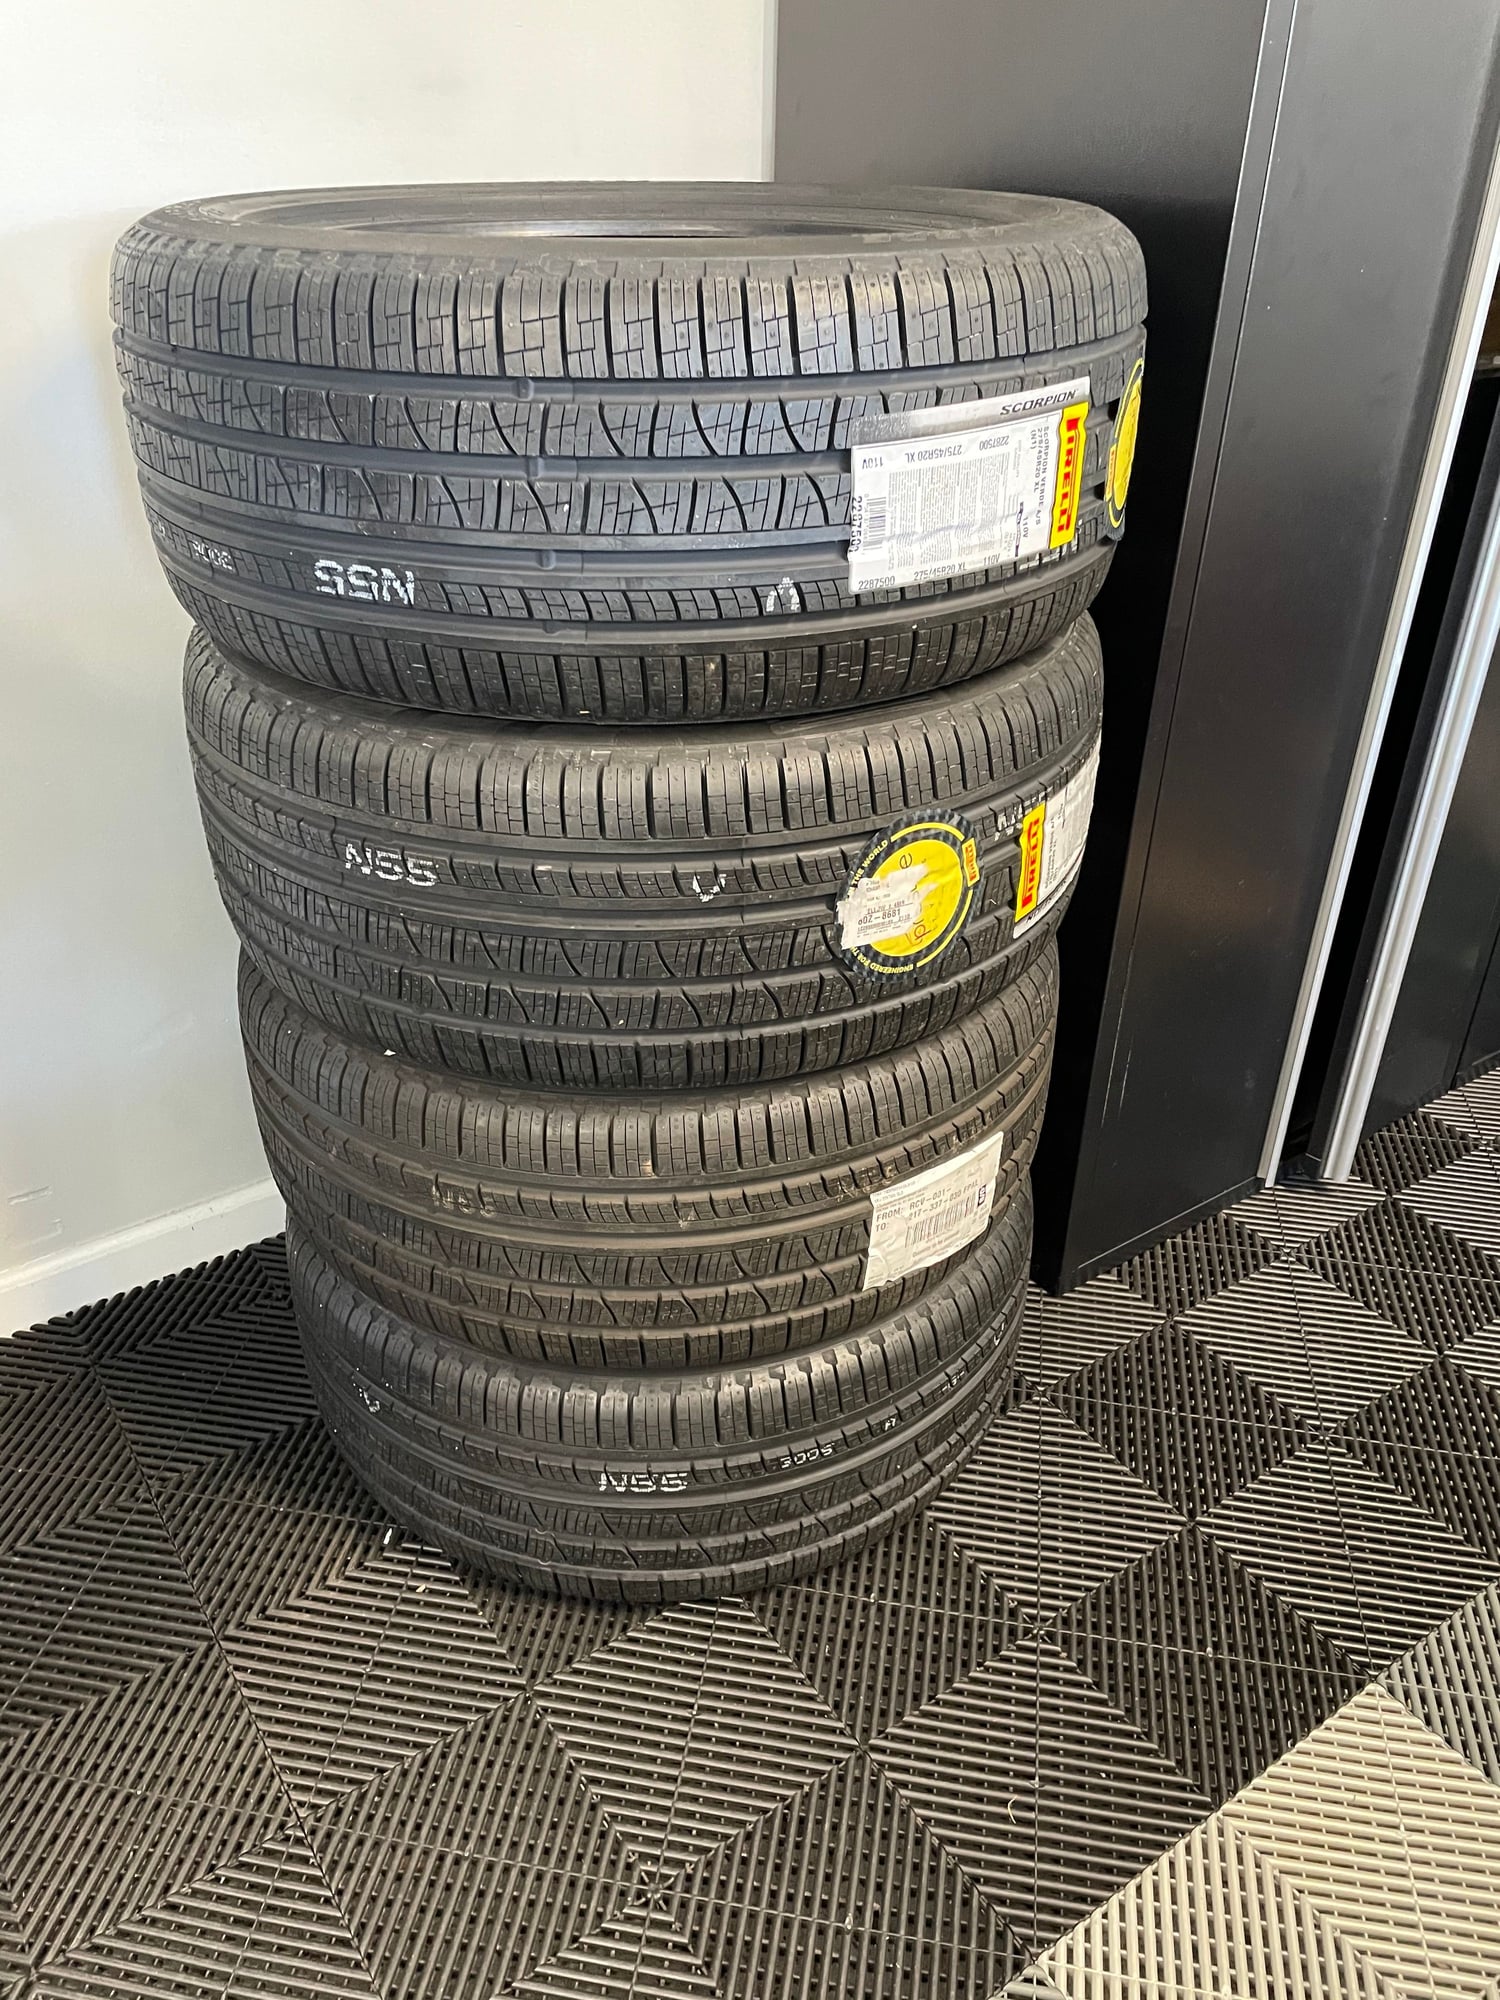 Wheels and Tires/Axles - 275/45R-20 Pirelli Scorpion Verde N1 - New - 2015 to 2018 Porsche Cayenne - Chatham, NJ 07928, United States